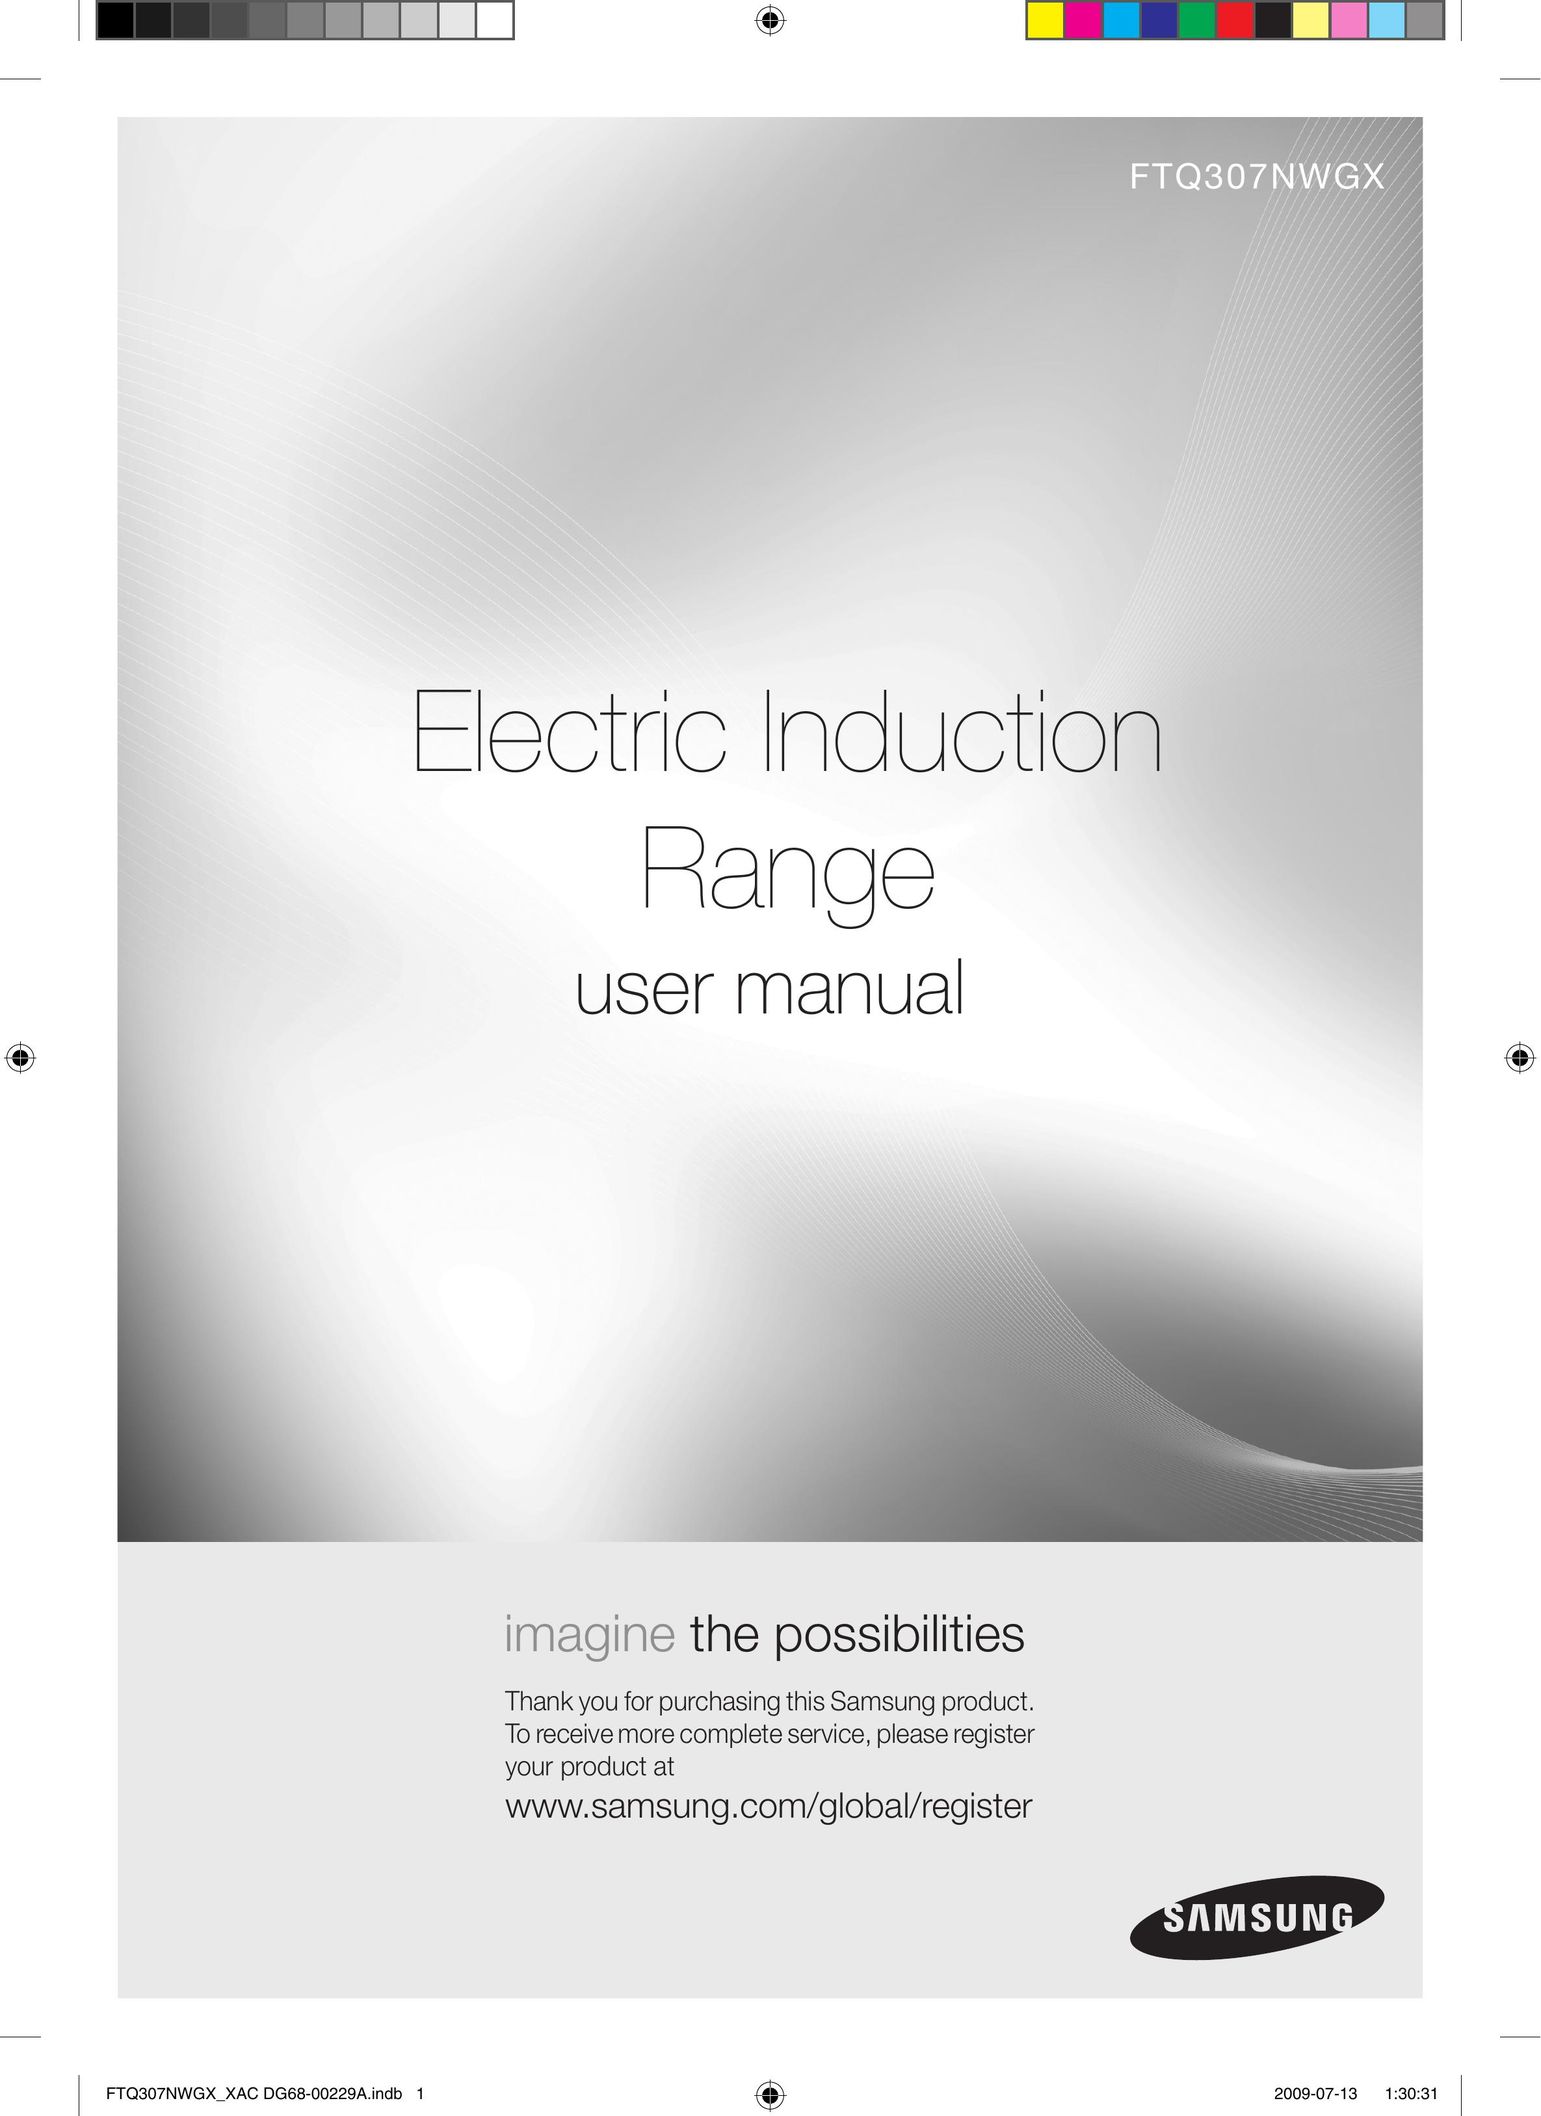 Samsung FTQ307NWGX Range User Manual